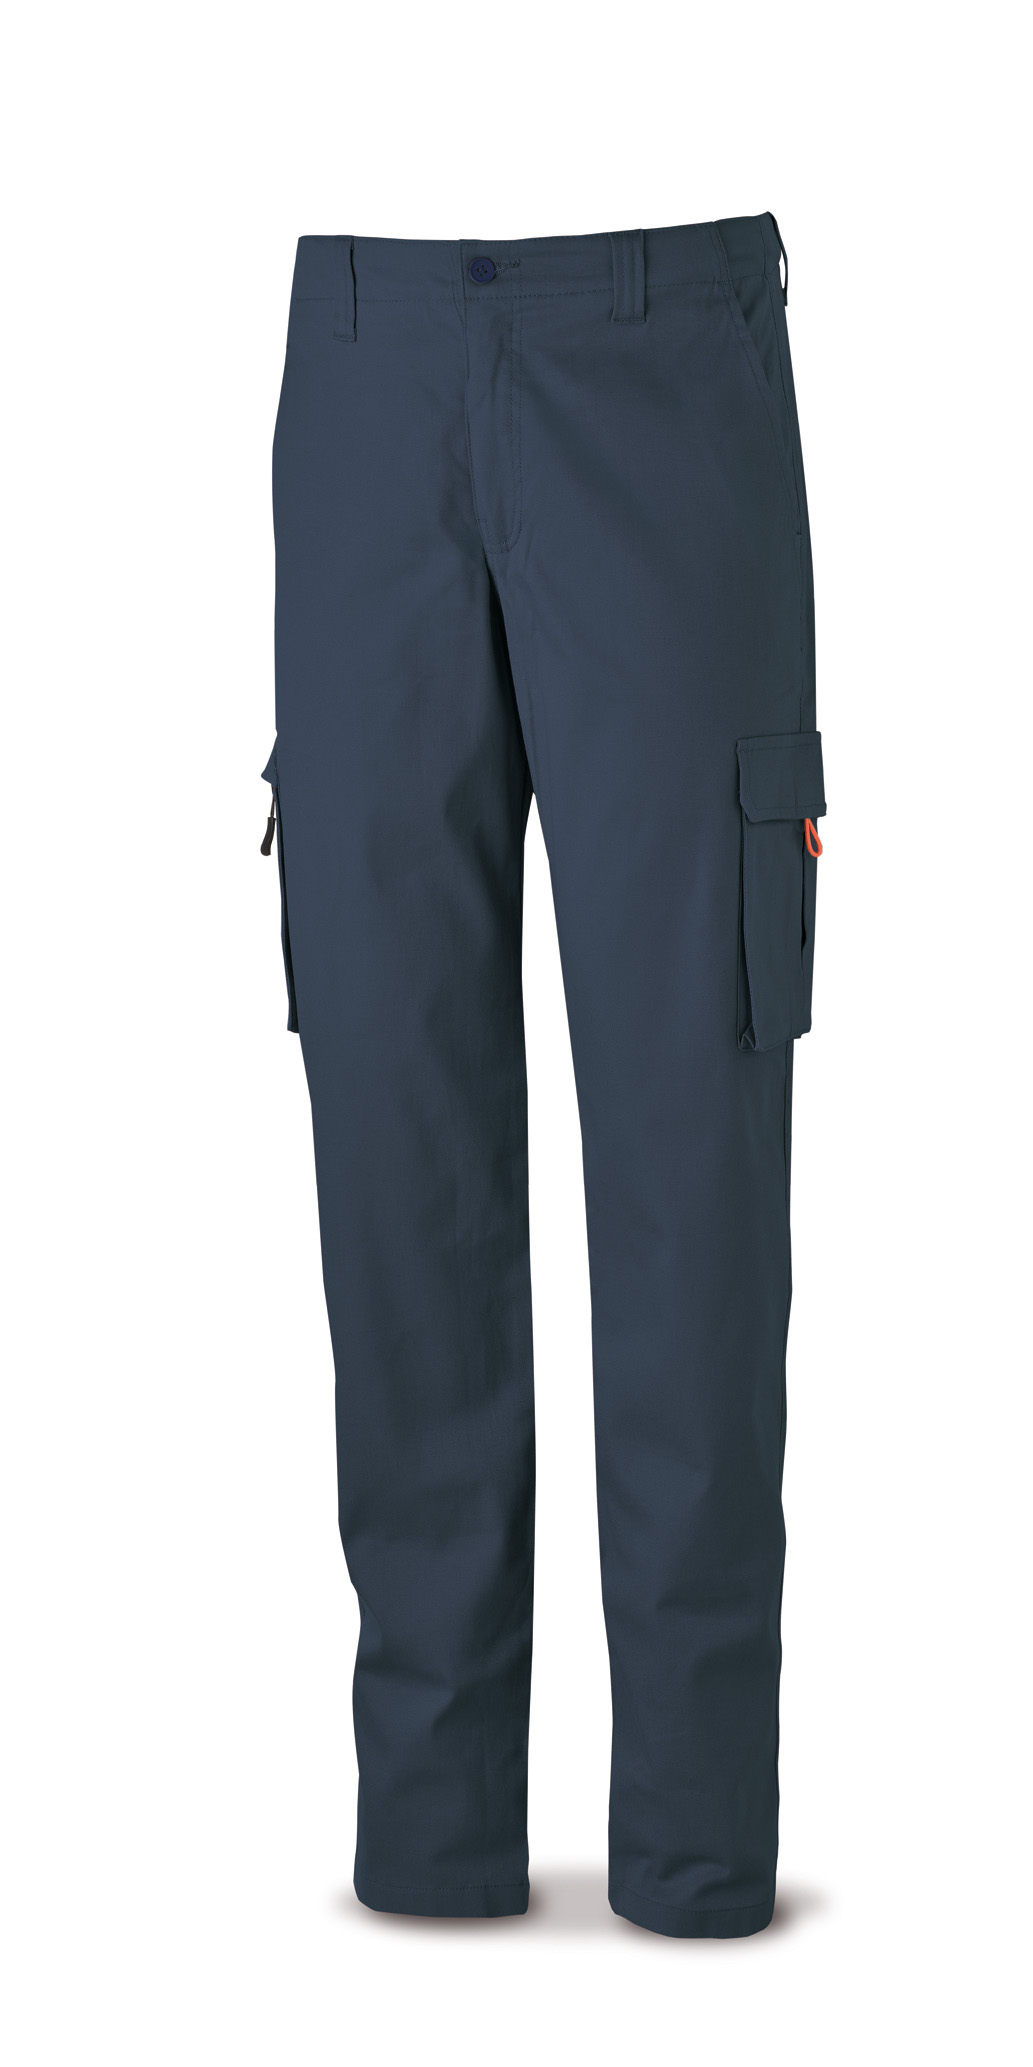 588-PELASRA Vestuario Laboral Serie Casual Pantalón STRETCH azul marino en algodón 260 gr. Multibolsillos